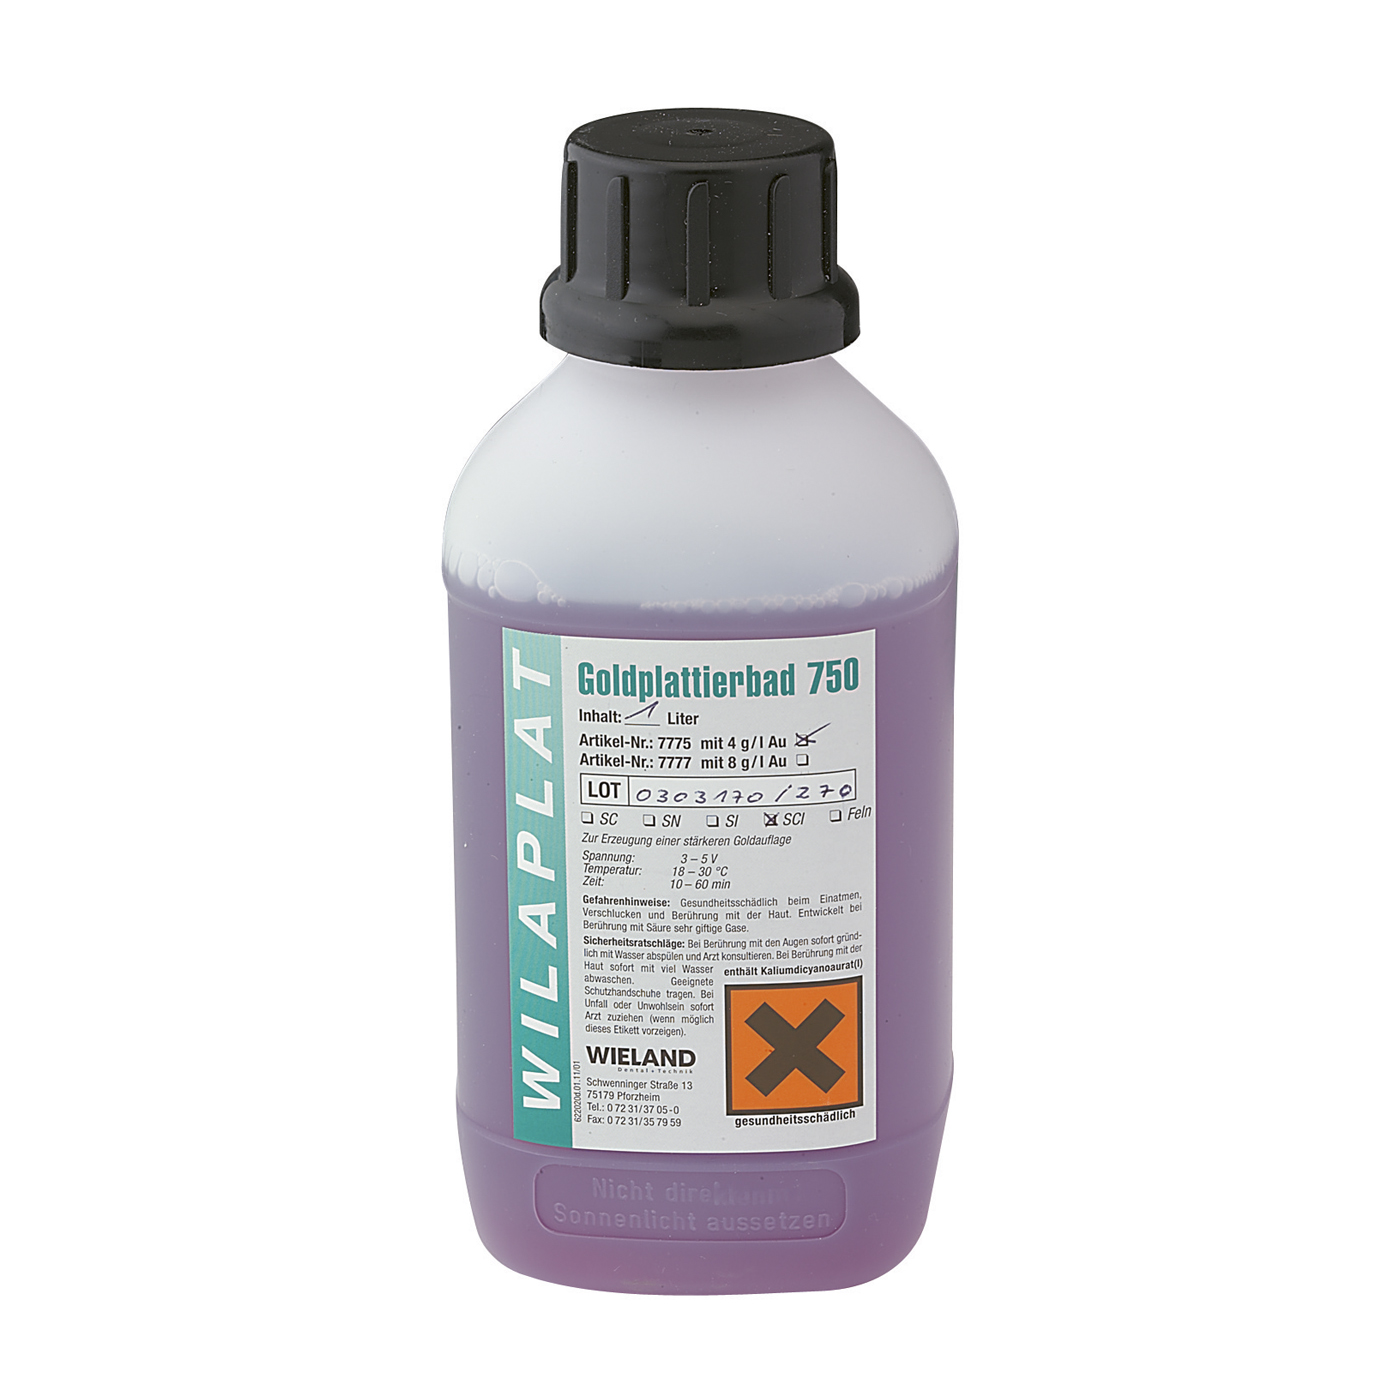 Wilaplat Gold Plating Bath 750, 4 g Au - 1000 ml